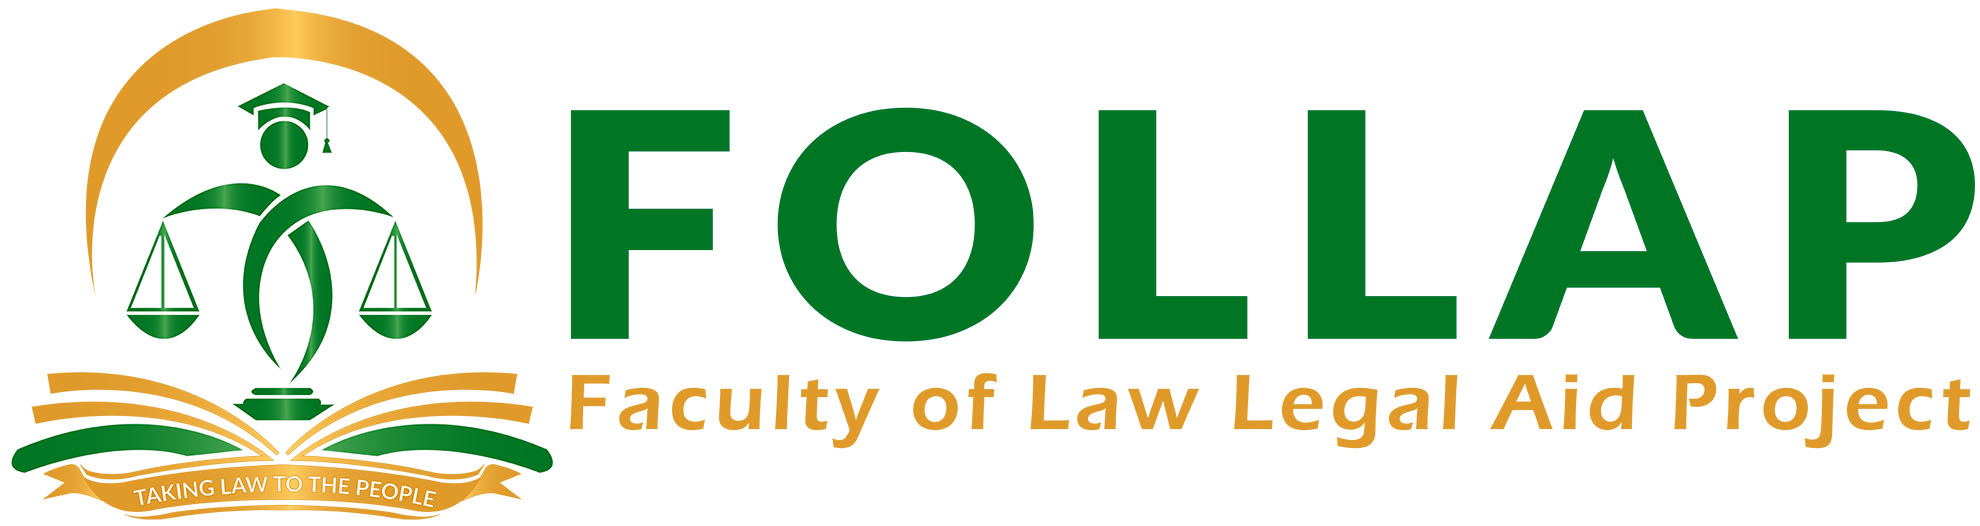 FOLLAP Landscape Logo